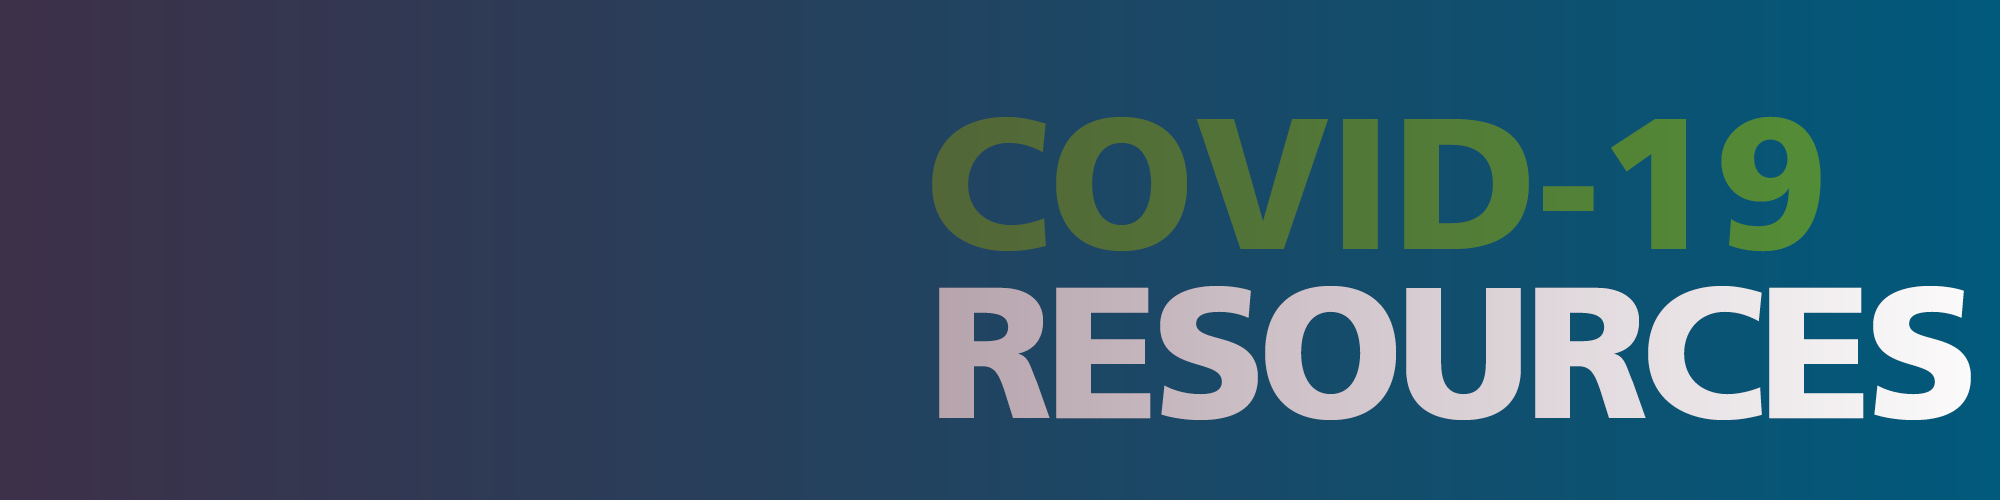 COVID-19 Resources for GreenStone